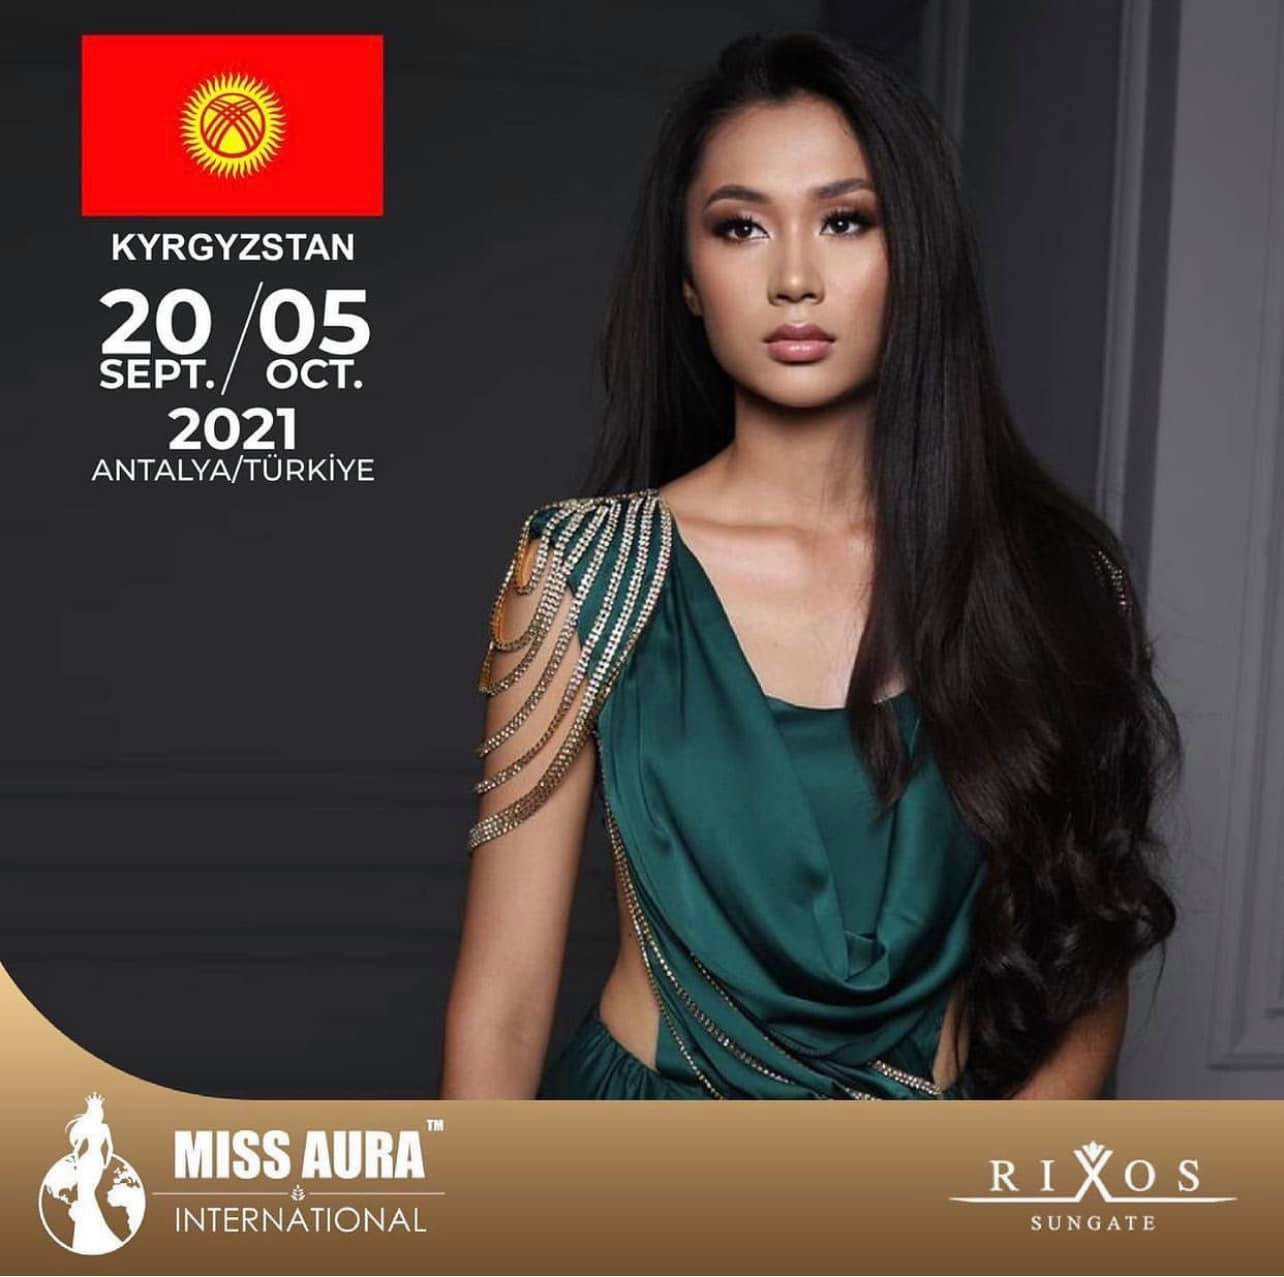 philippines vence miss aura international 2021. - Página 2 RPrEmB